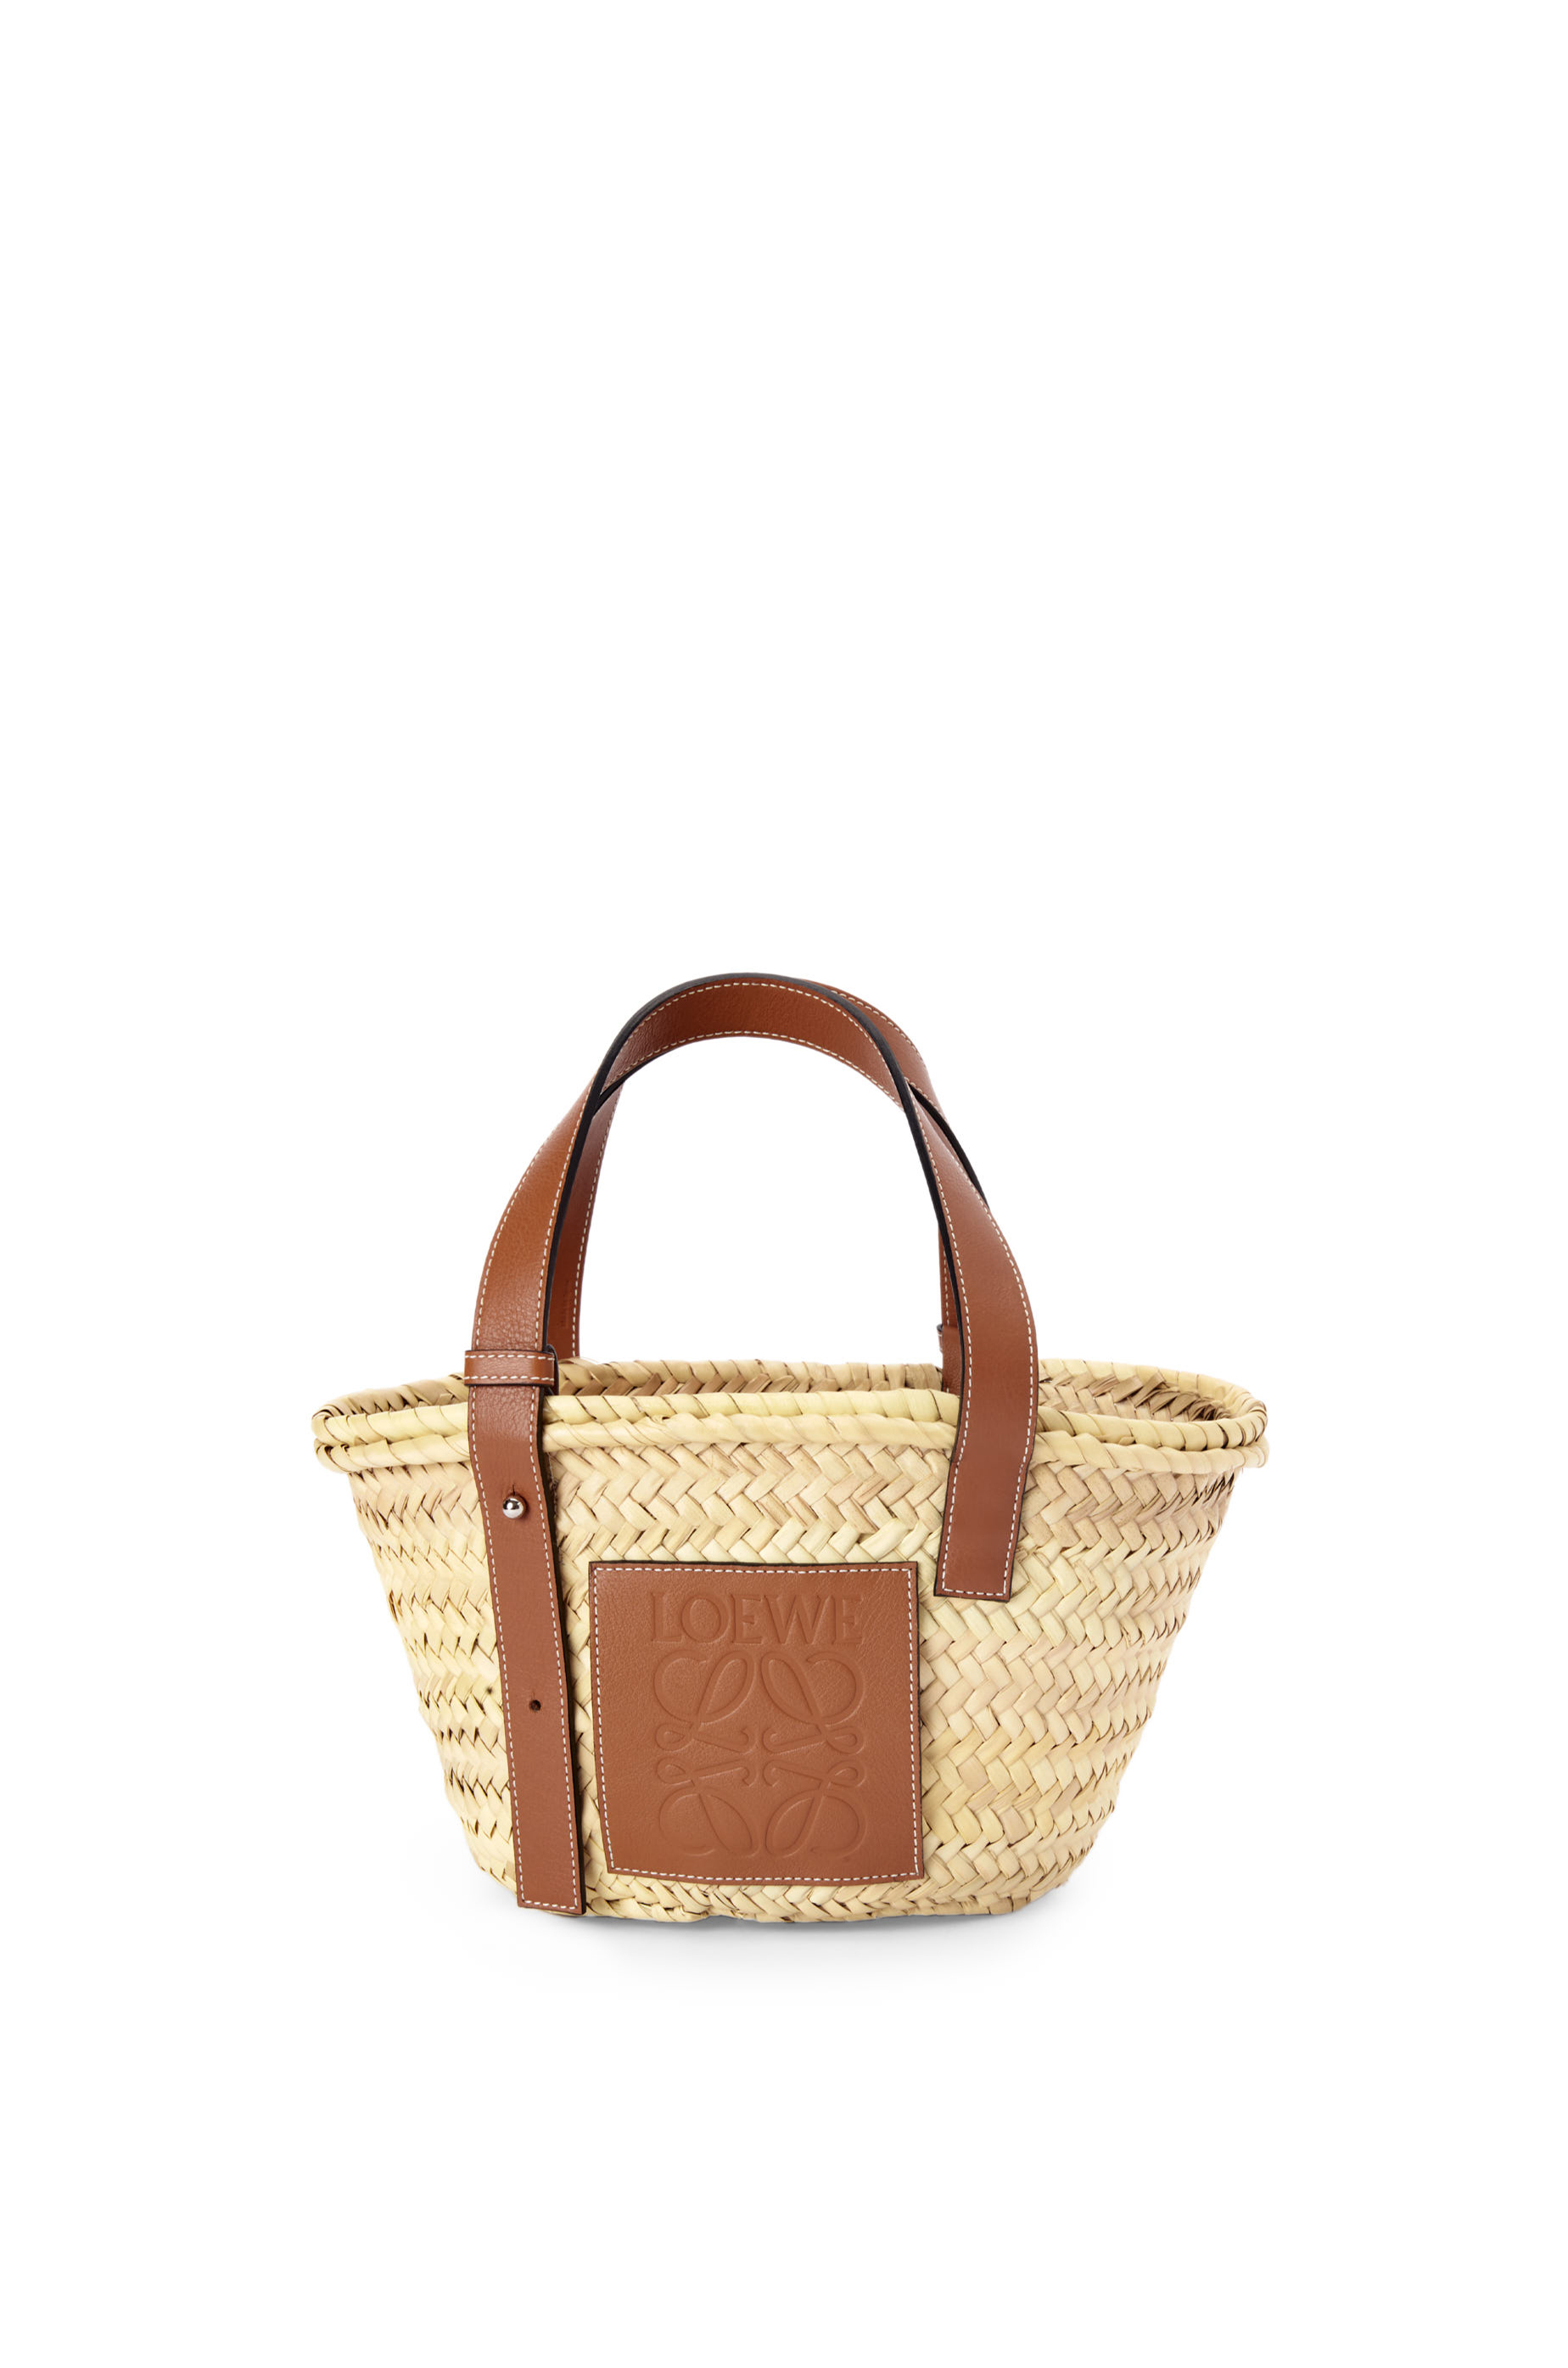 Small Basket bag in palm leaf and calfskin Natural/Tan - LOEWE